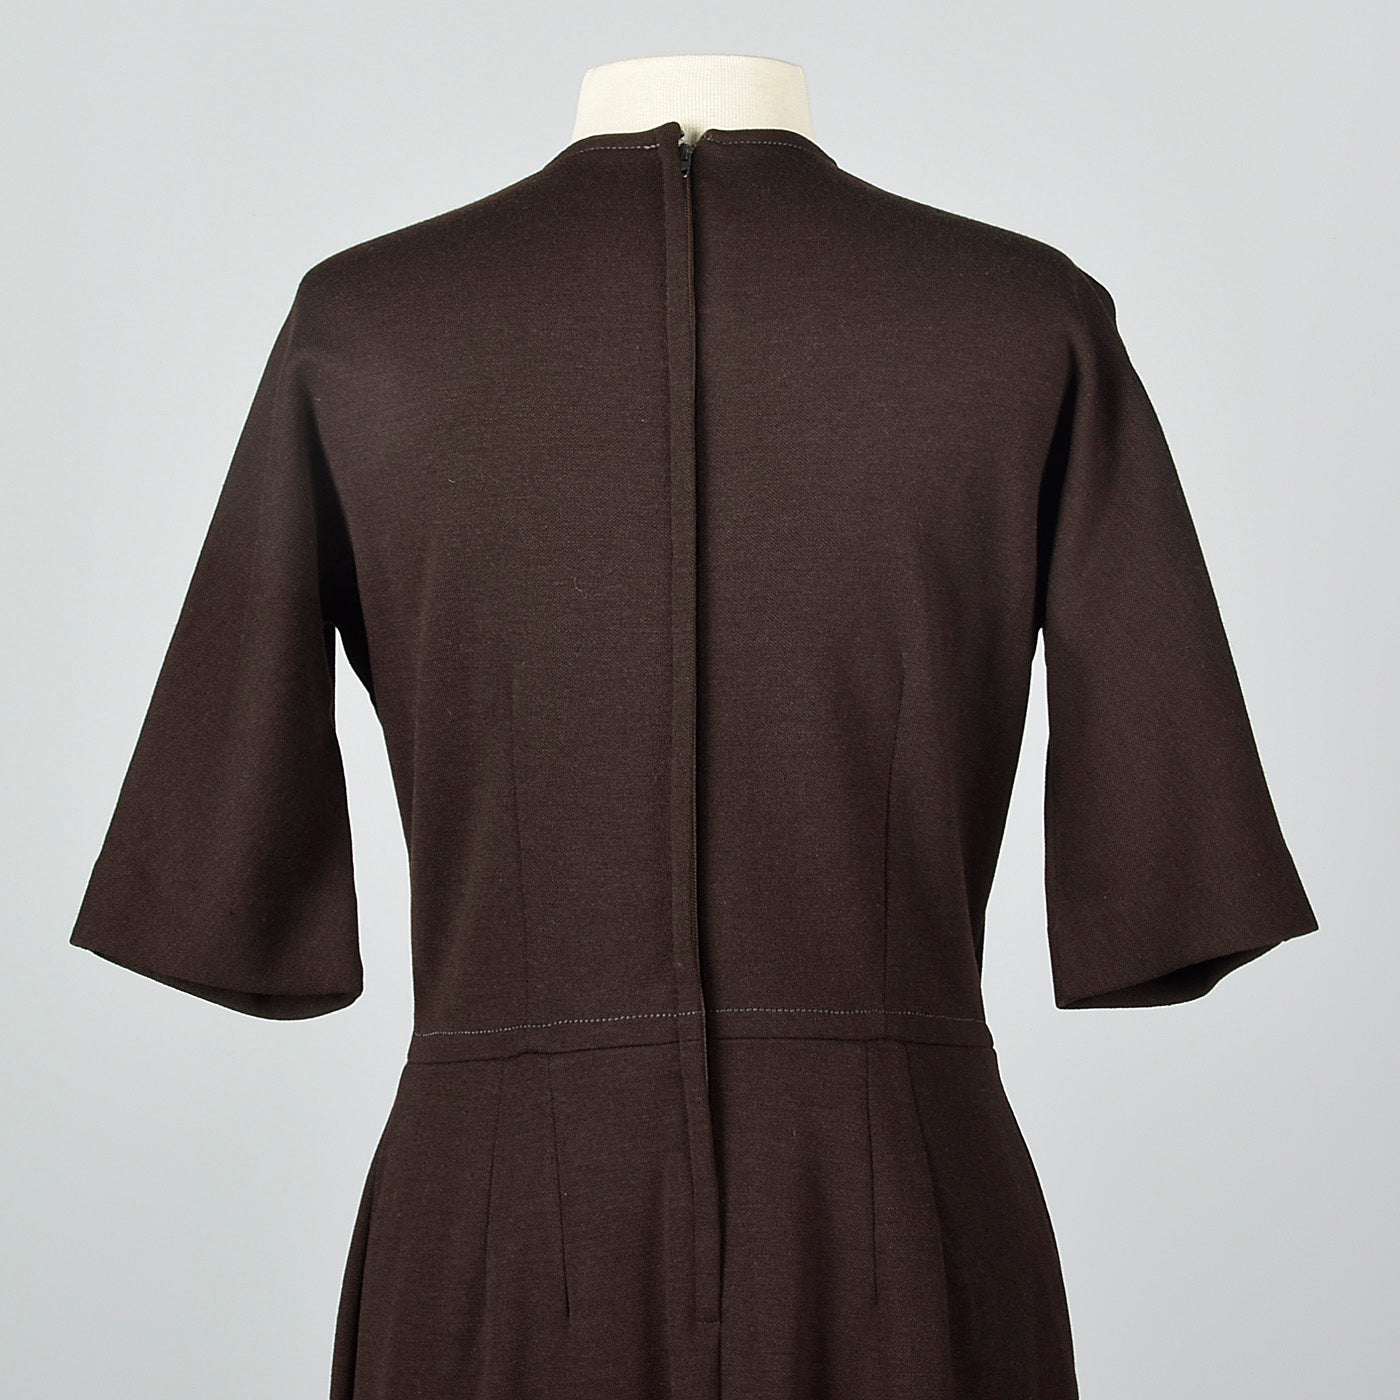 1950s Brown Knit Dress